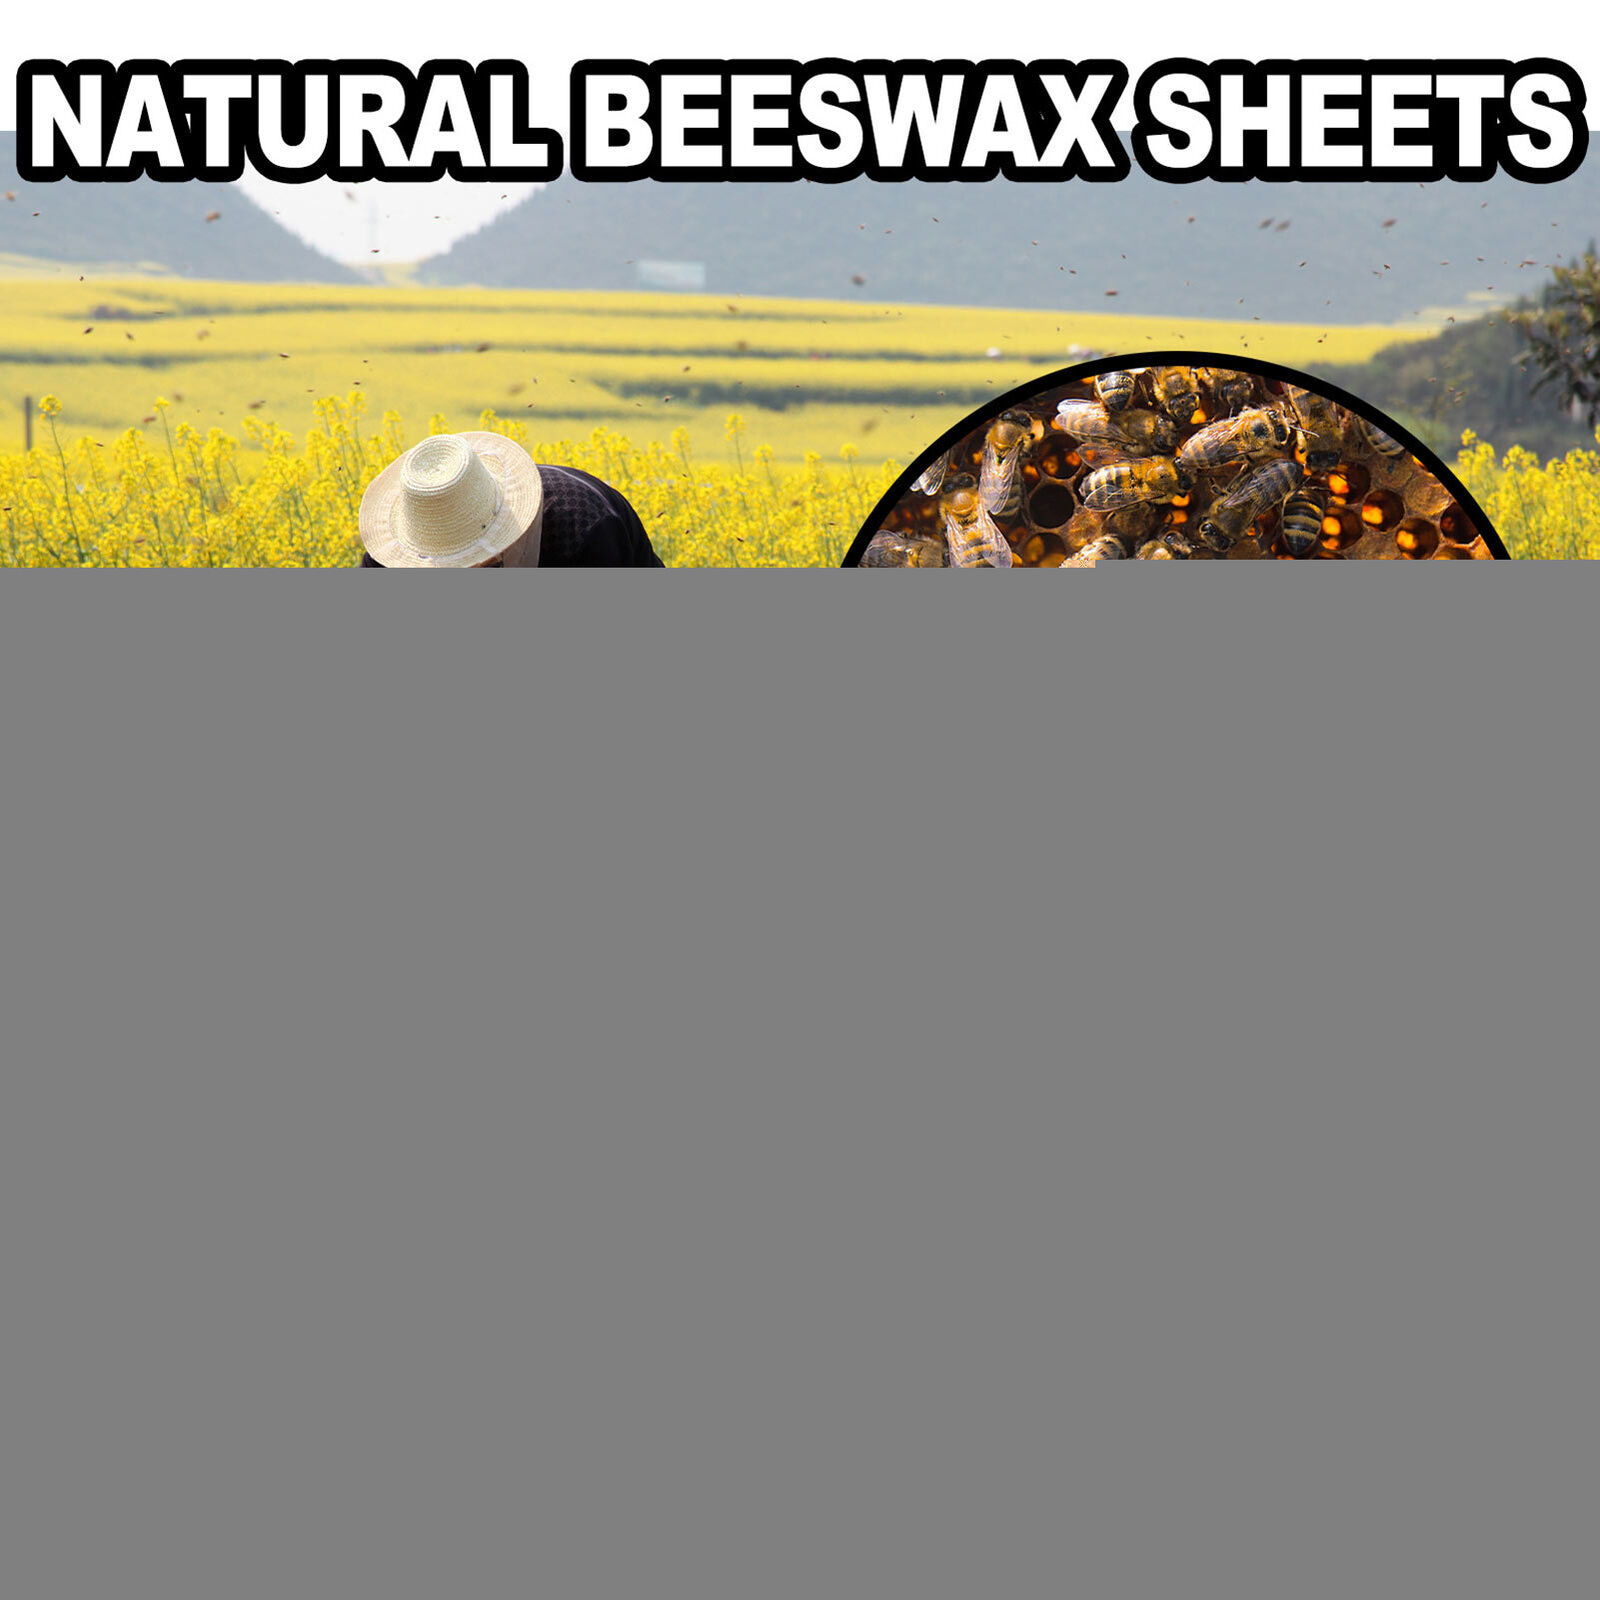 10 Pcs Beeswax Foundation Sheets Beeswax Candle Making Natural Wax Foundation